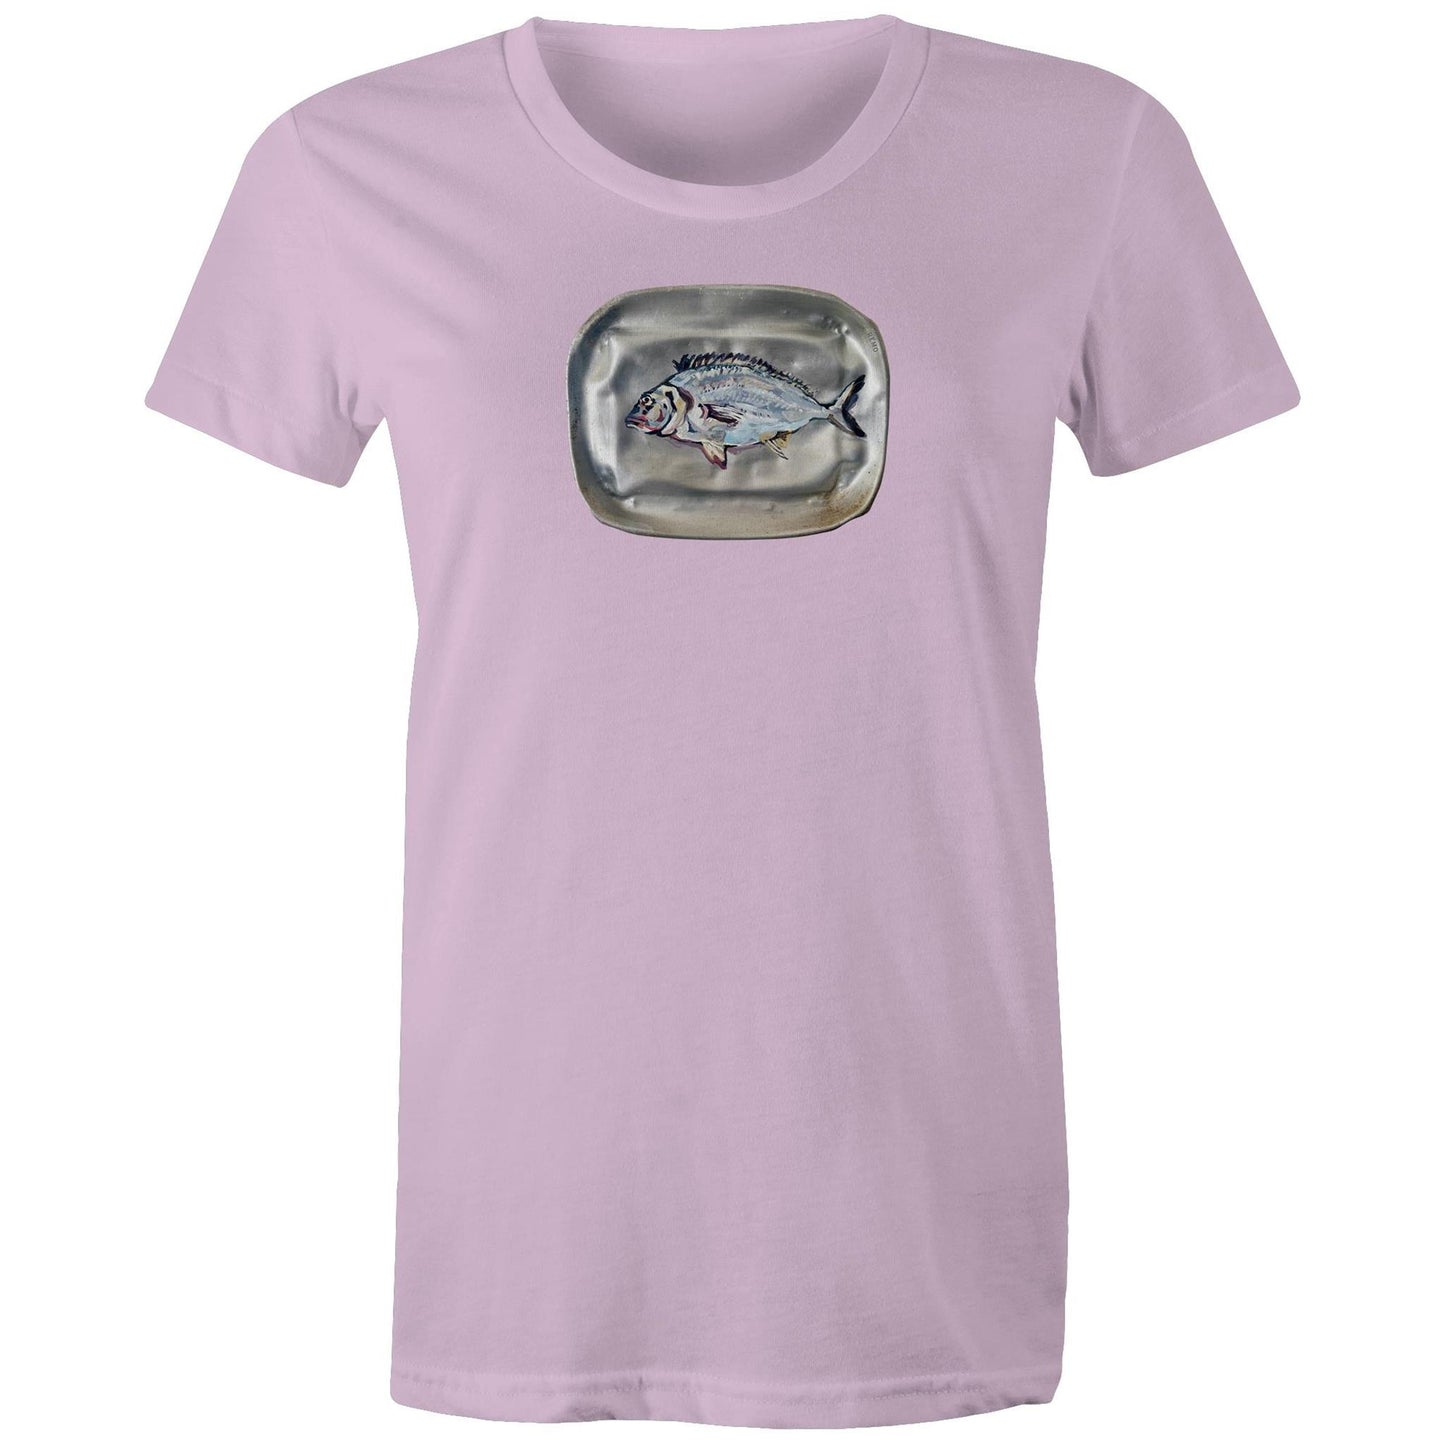 Fish Dish T Shirts for Women